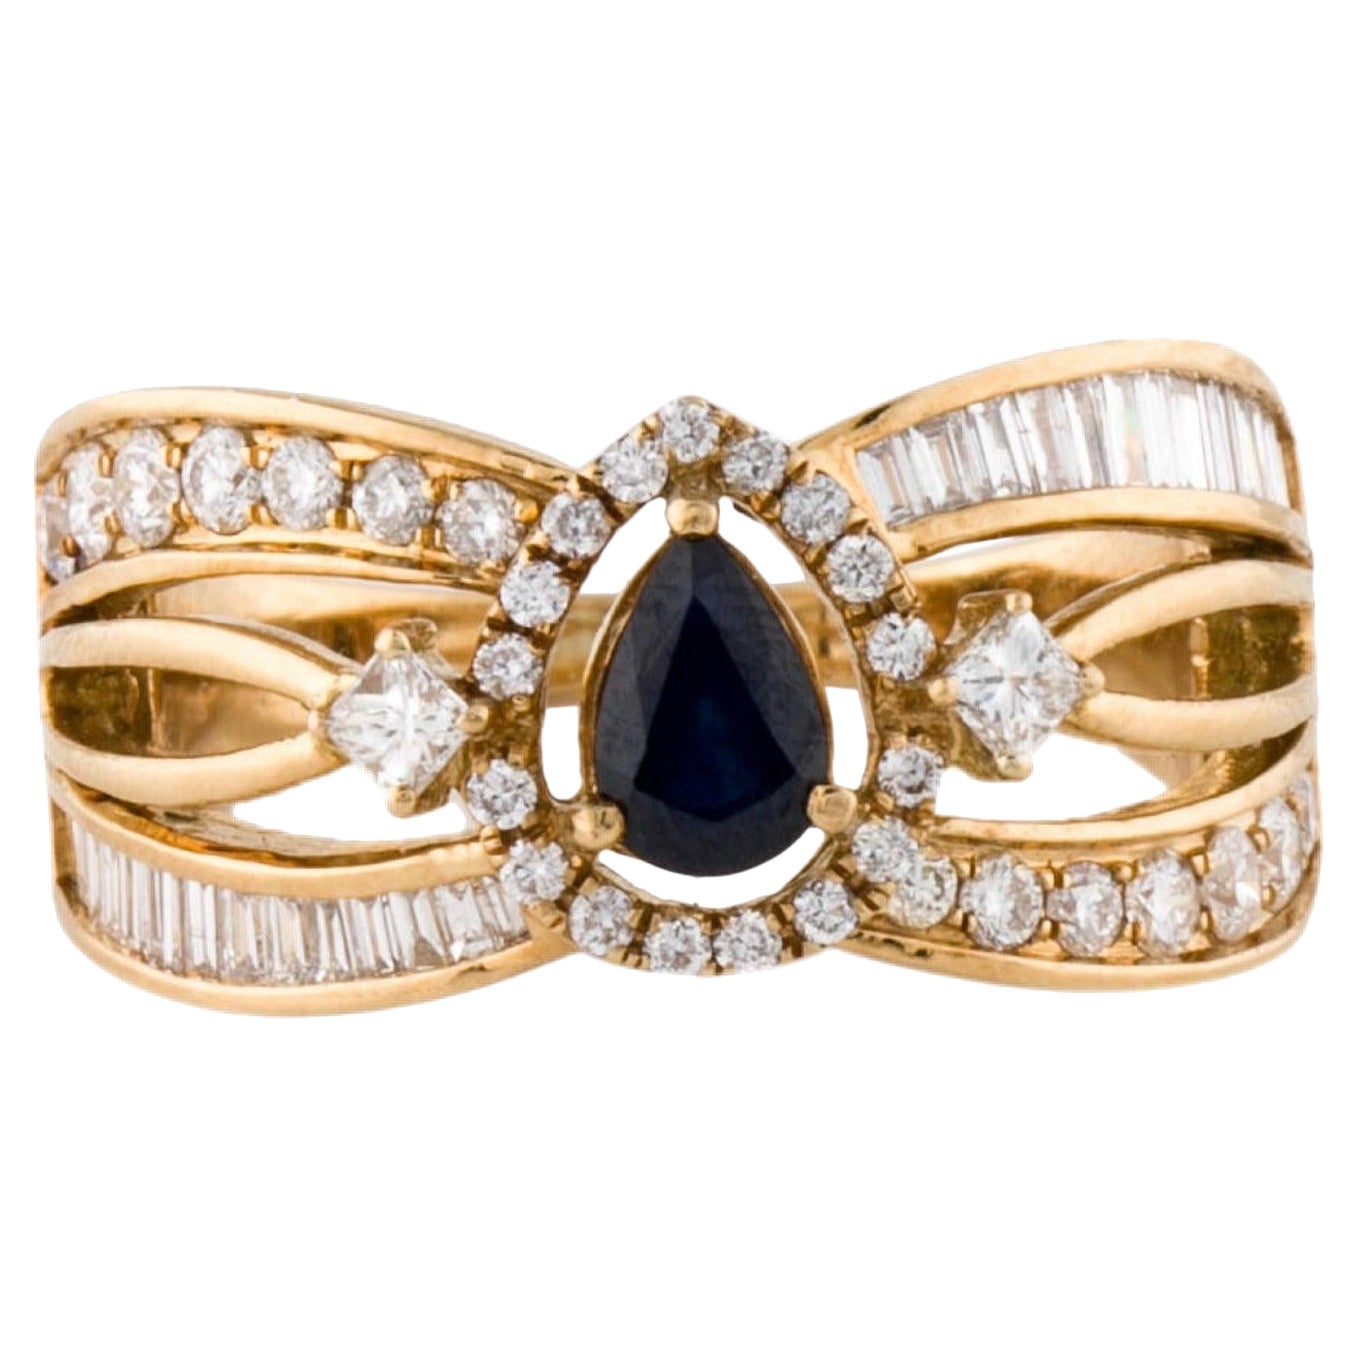 18K Sapphire & Diamond Cocktail Ring Size 6.5 - Elegant, Statement Luxury Design